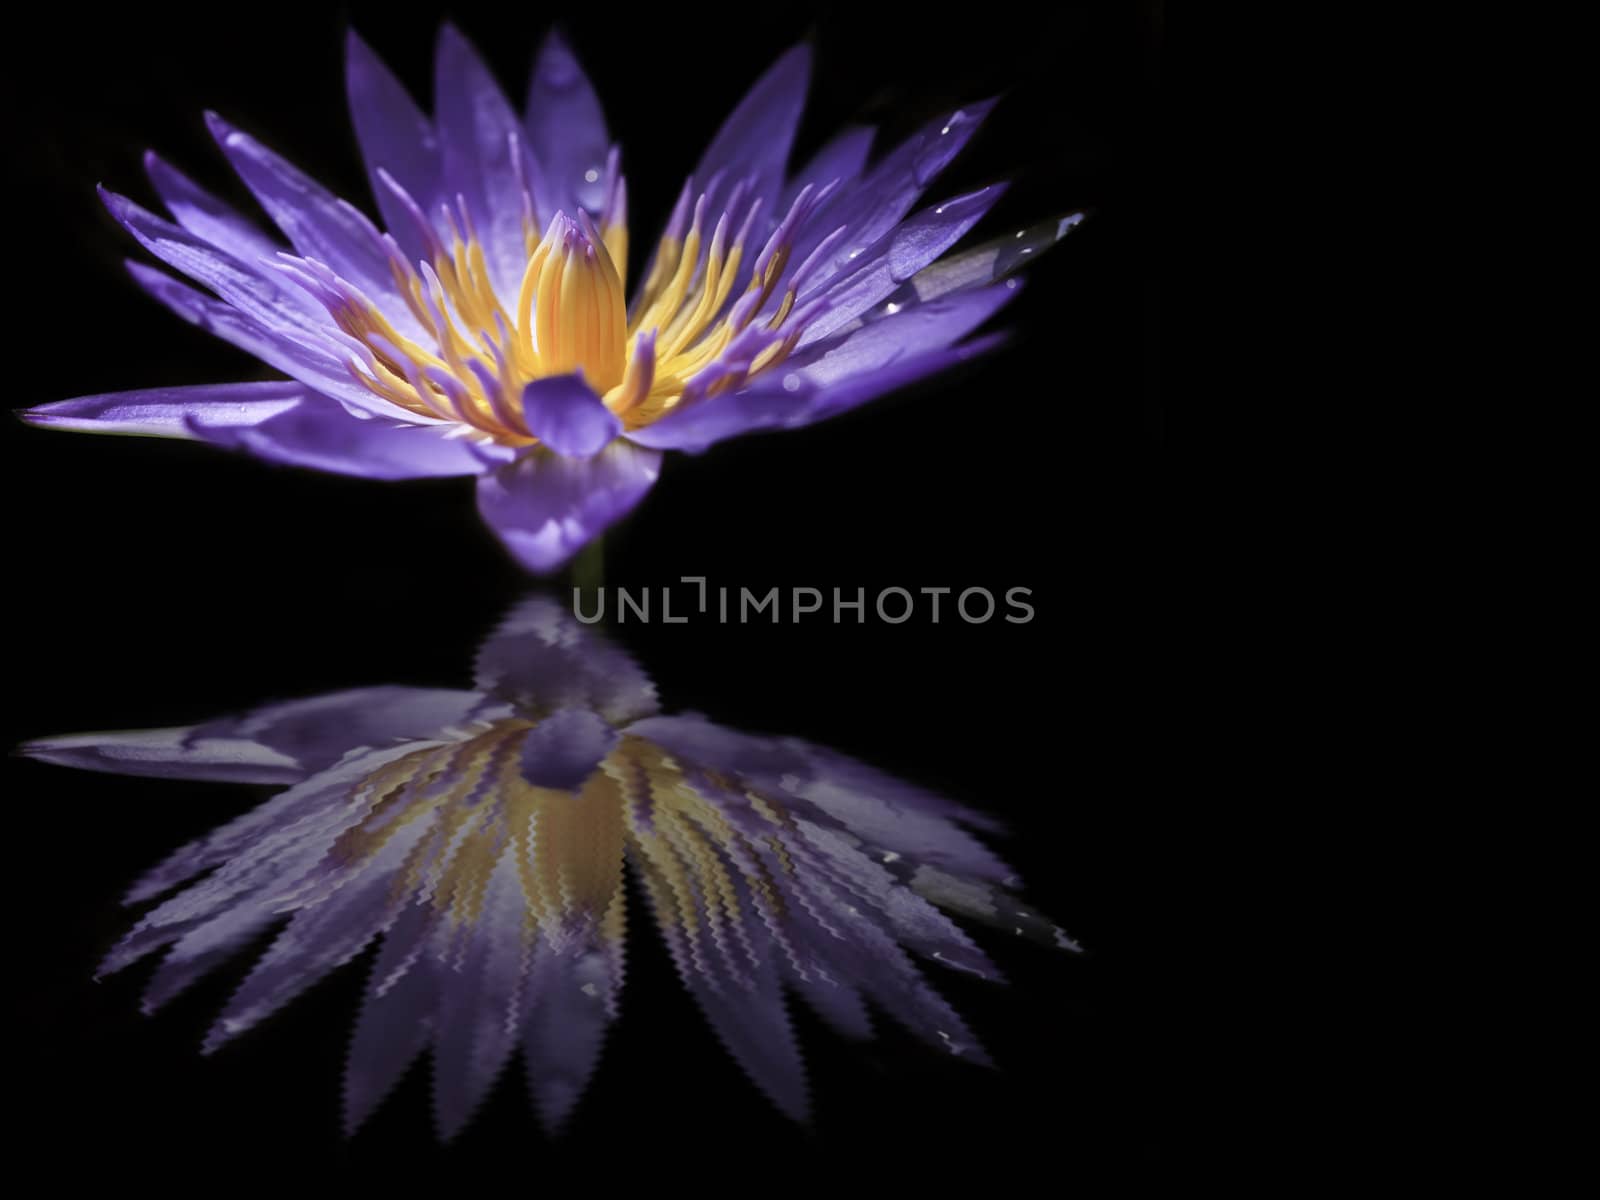 Violet Lotus by Suriyaphoto